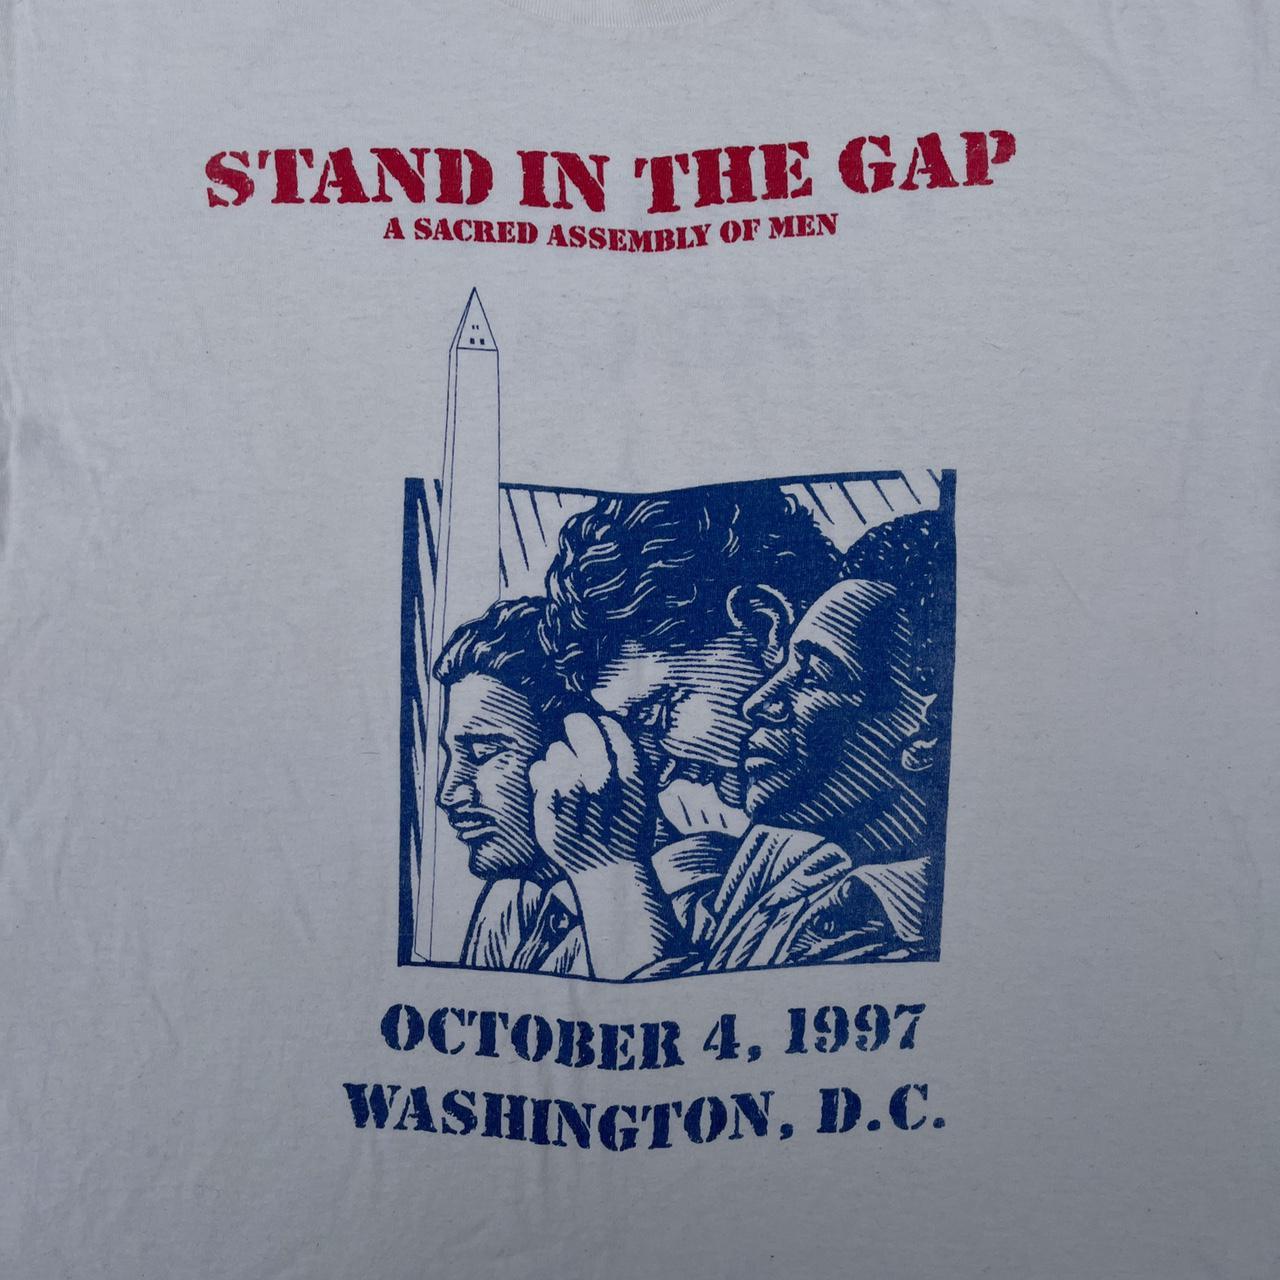 Product Image 3 - Vintage T-Shirt

•Unisex Vintage 1997 Stand